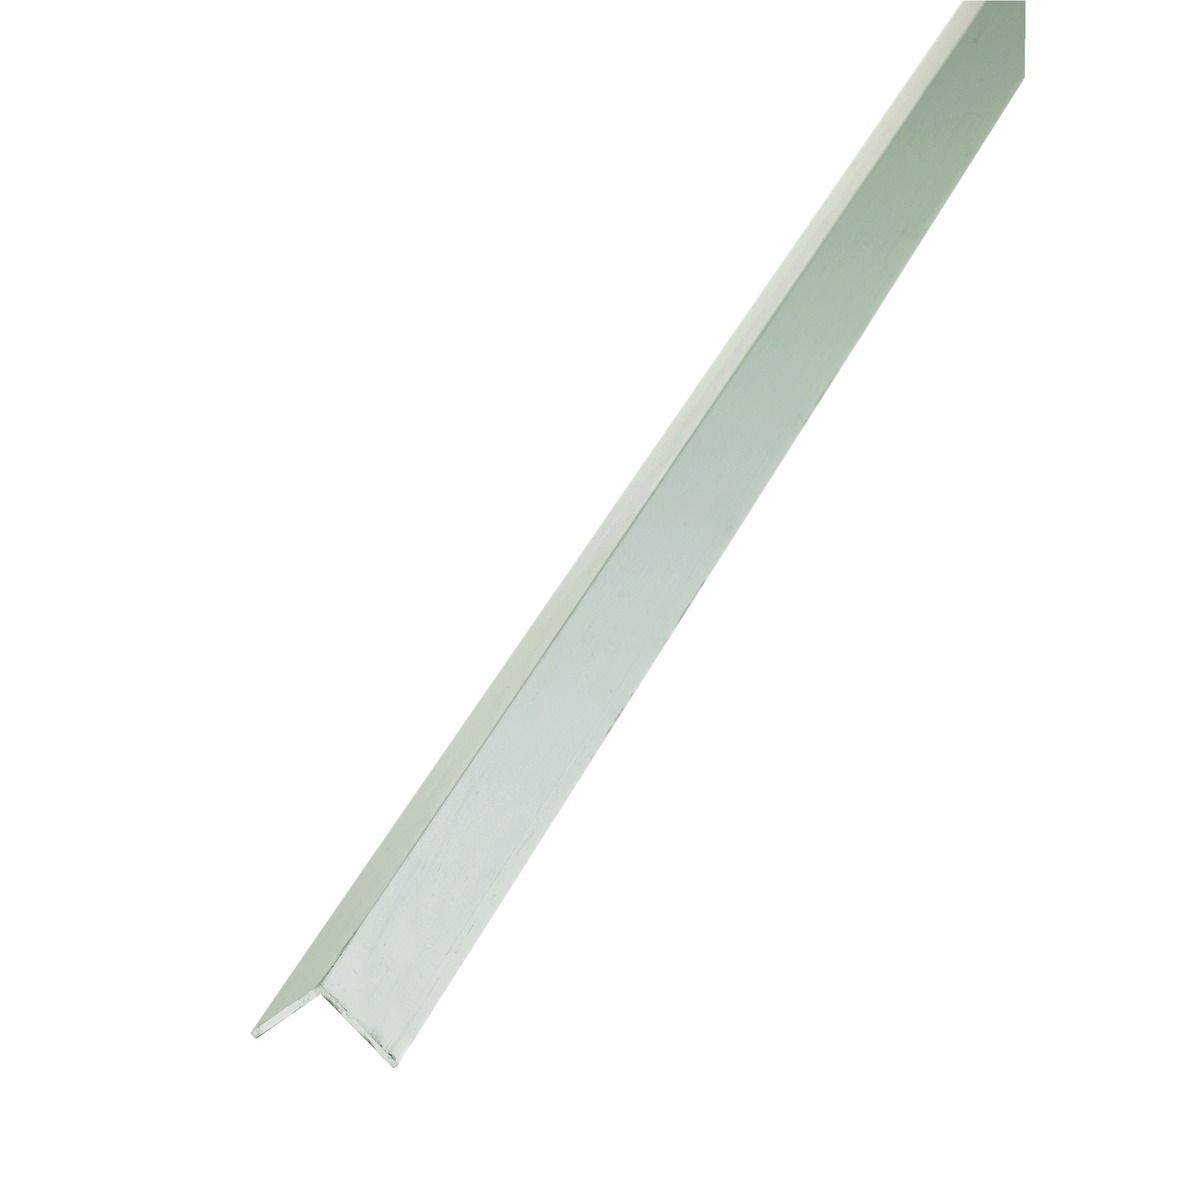 Image of Wickes Angle - Anodised Aluminium 10 x 20mm x 1m